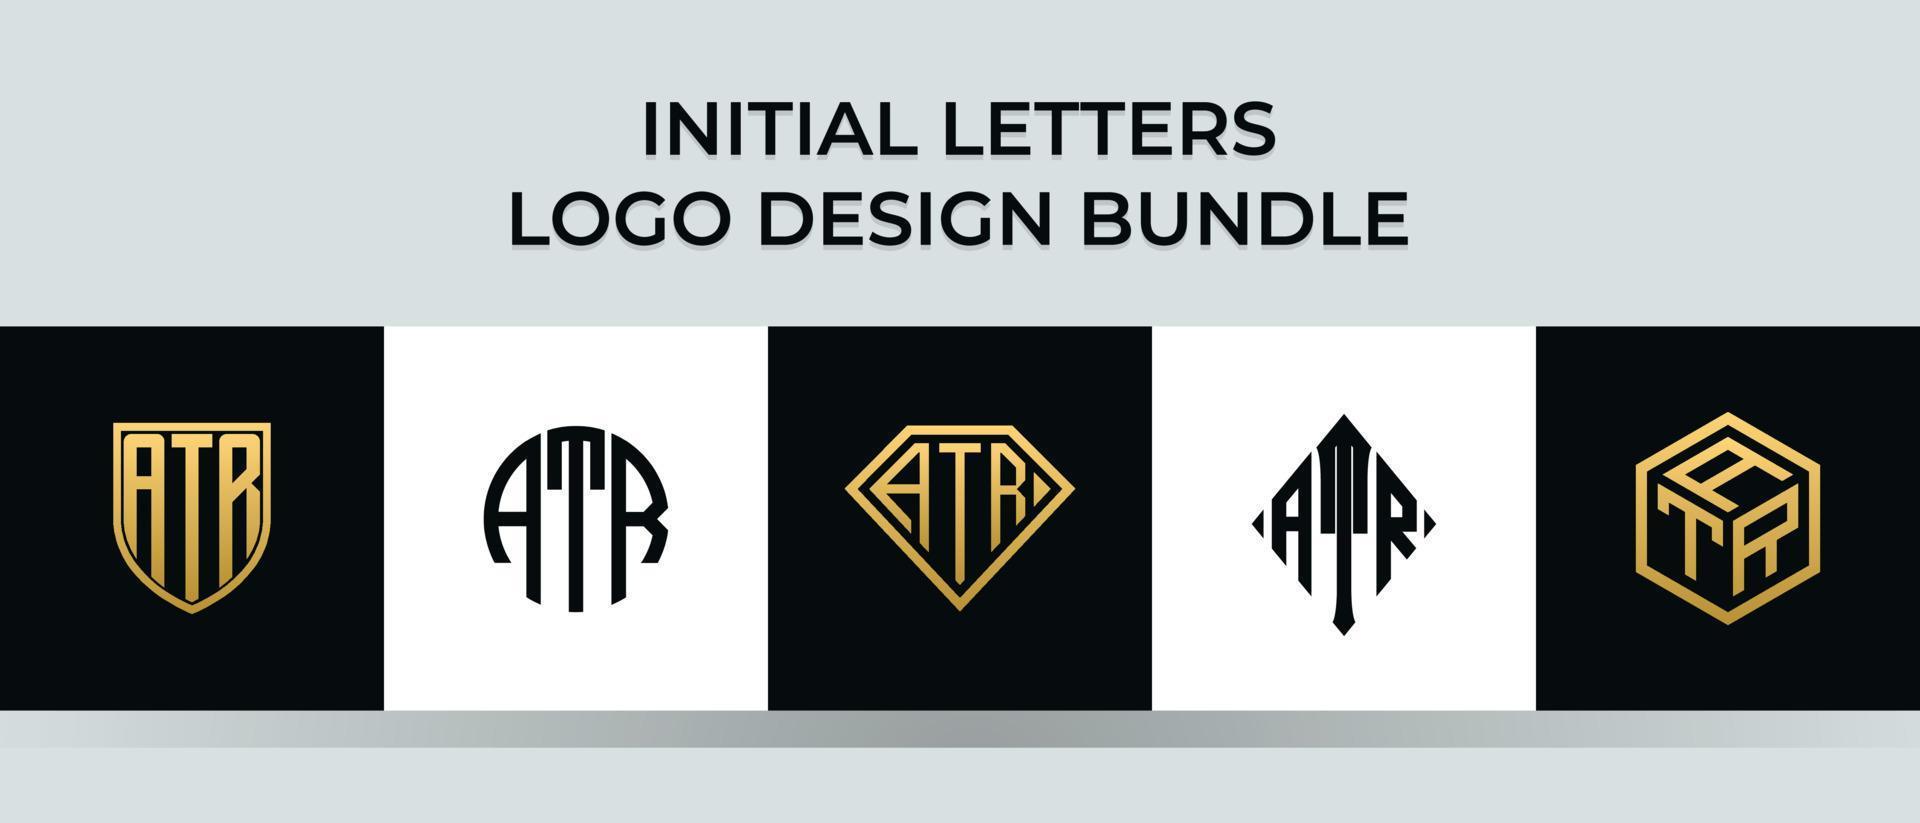 Anfangsbuchstaben atr Logo Designs Bundle vektor